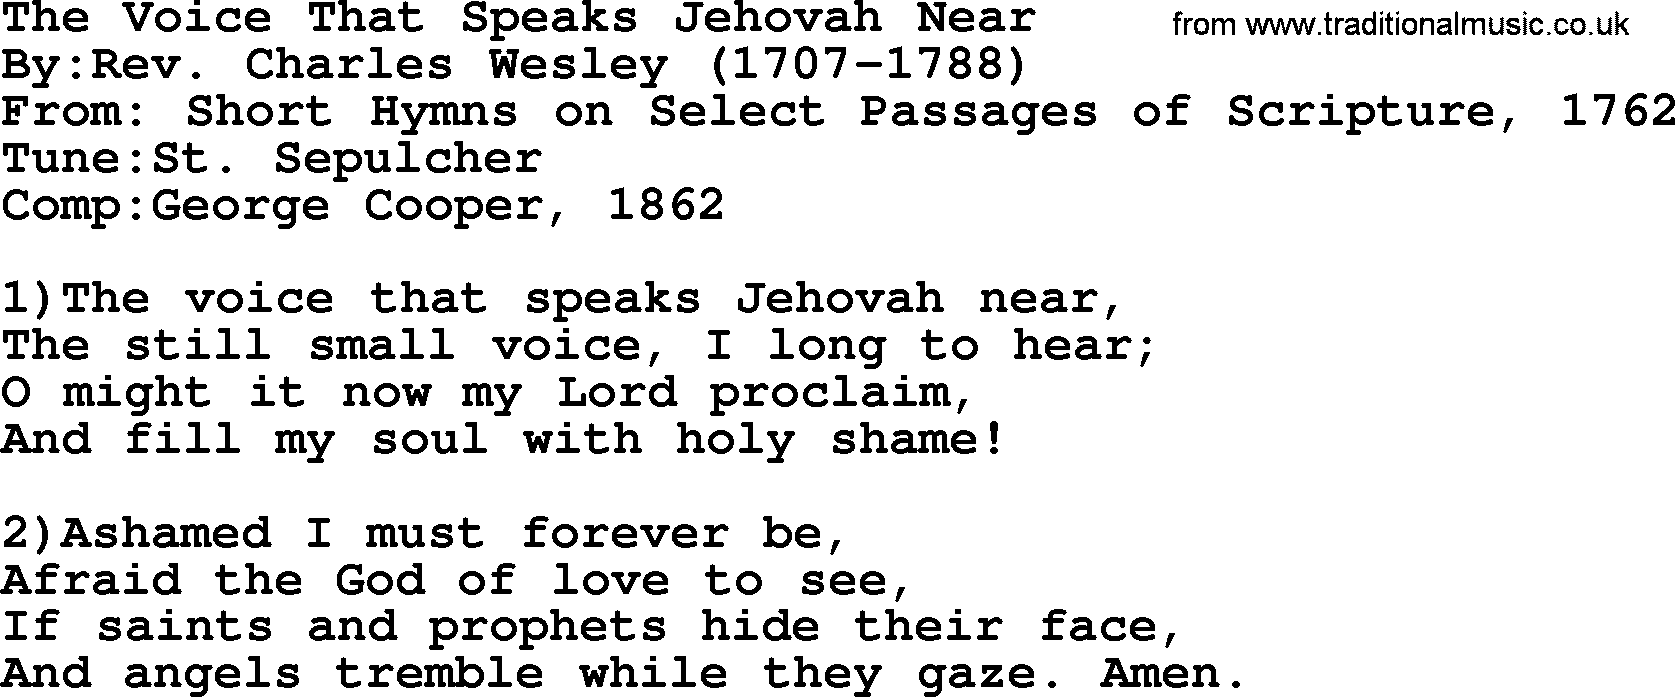 Methodist Hymn: The Voice That Speaks Jehovah Near, lyrics